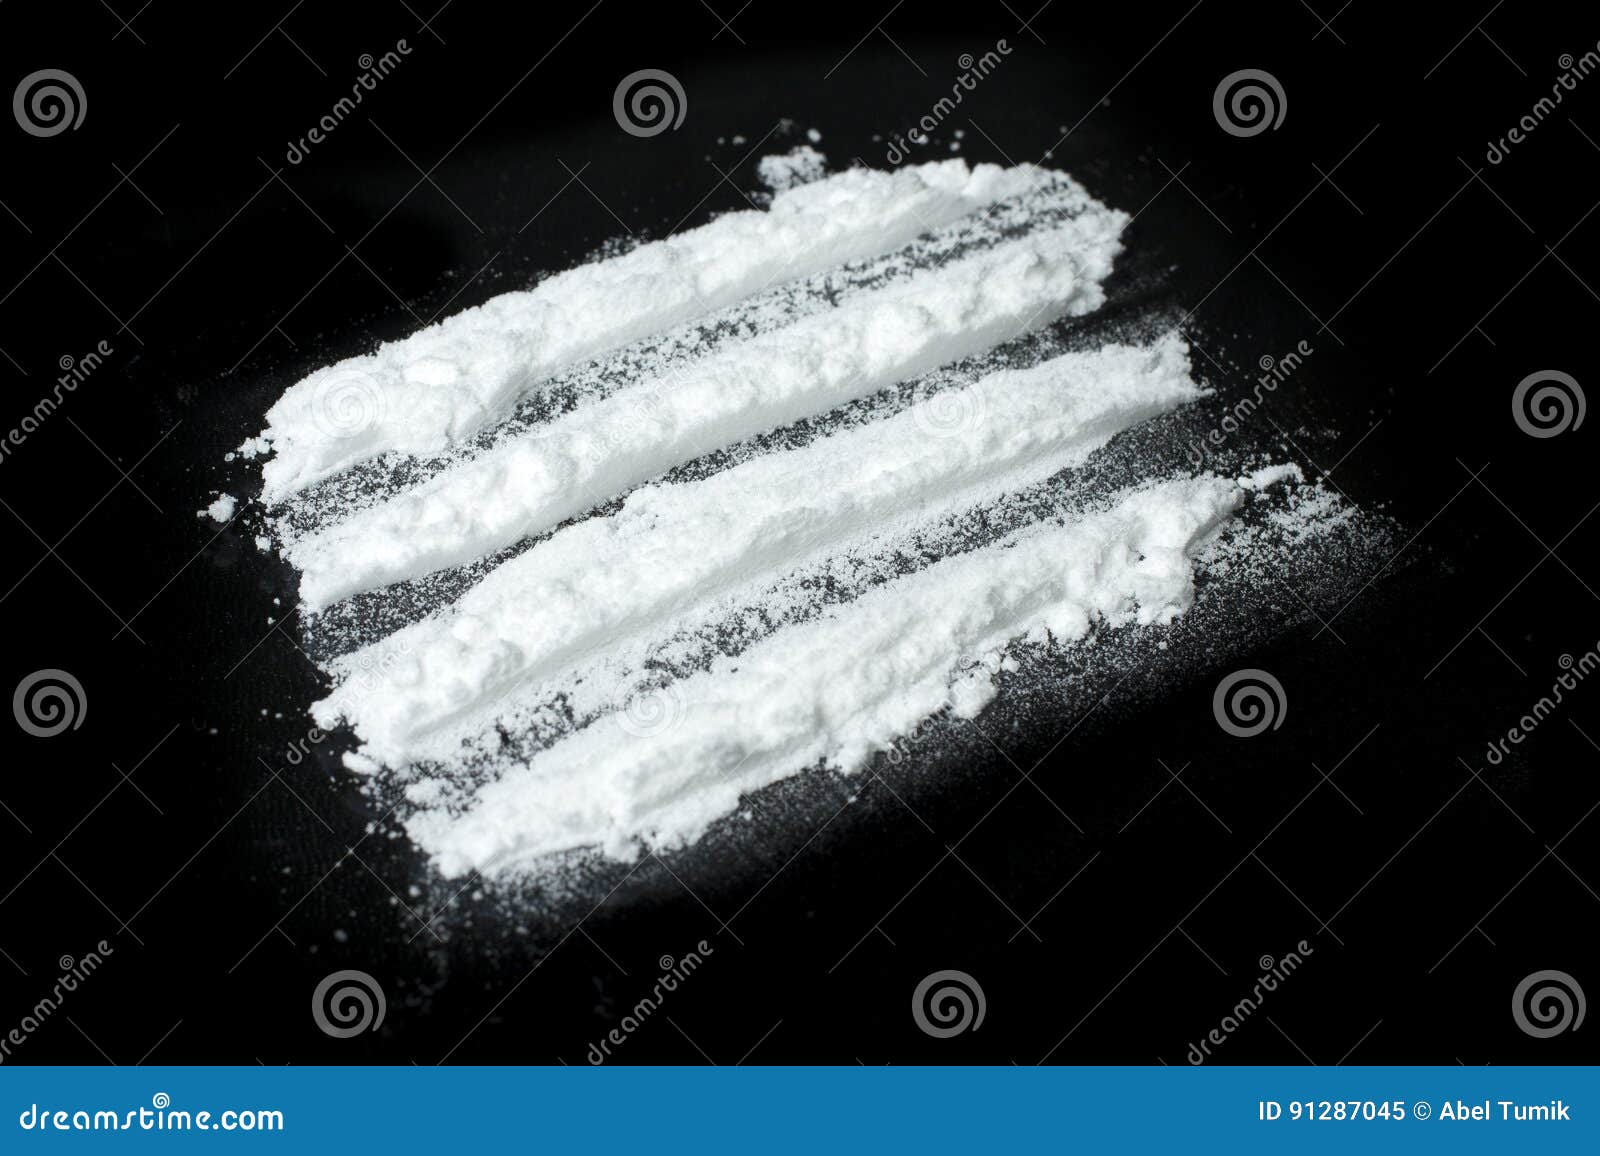 Cocain stock image. Image of drug, coca, black, addiction - 91287045